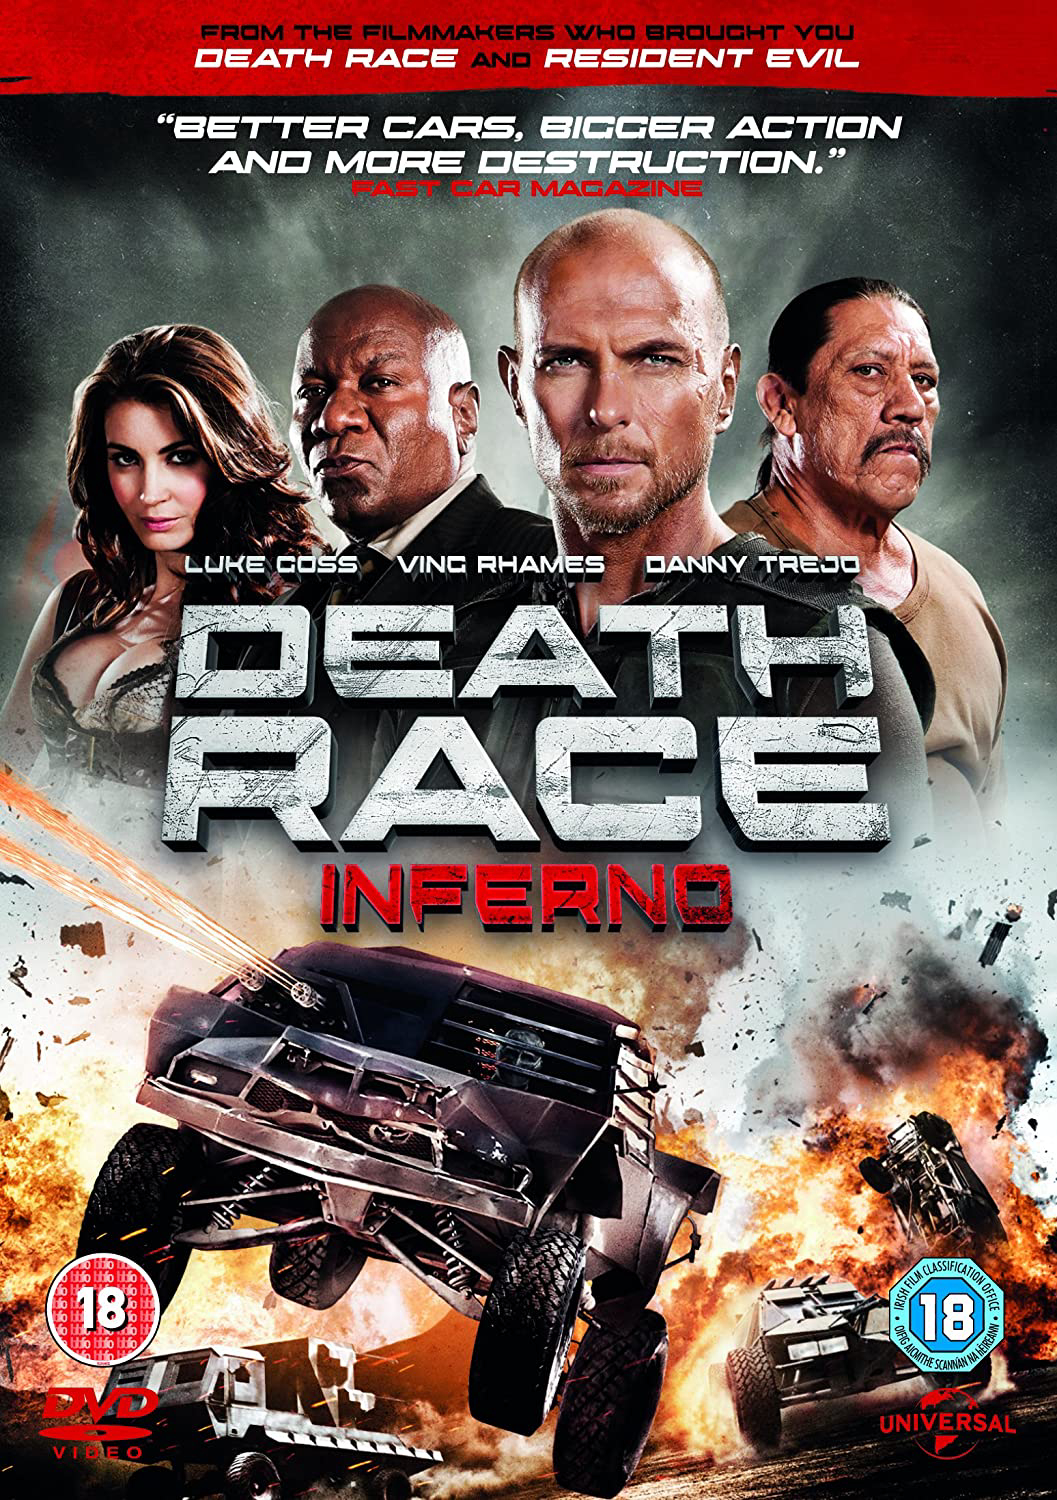 Poster Phim Cuộc Đua Tử Thần 3 (Death Race 3: Inferno)